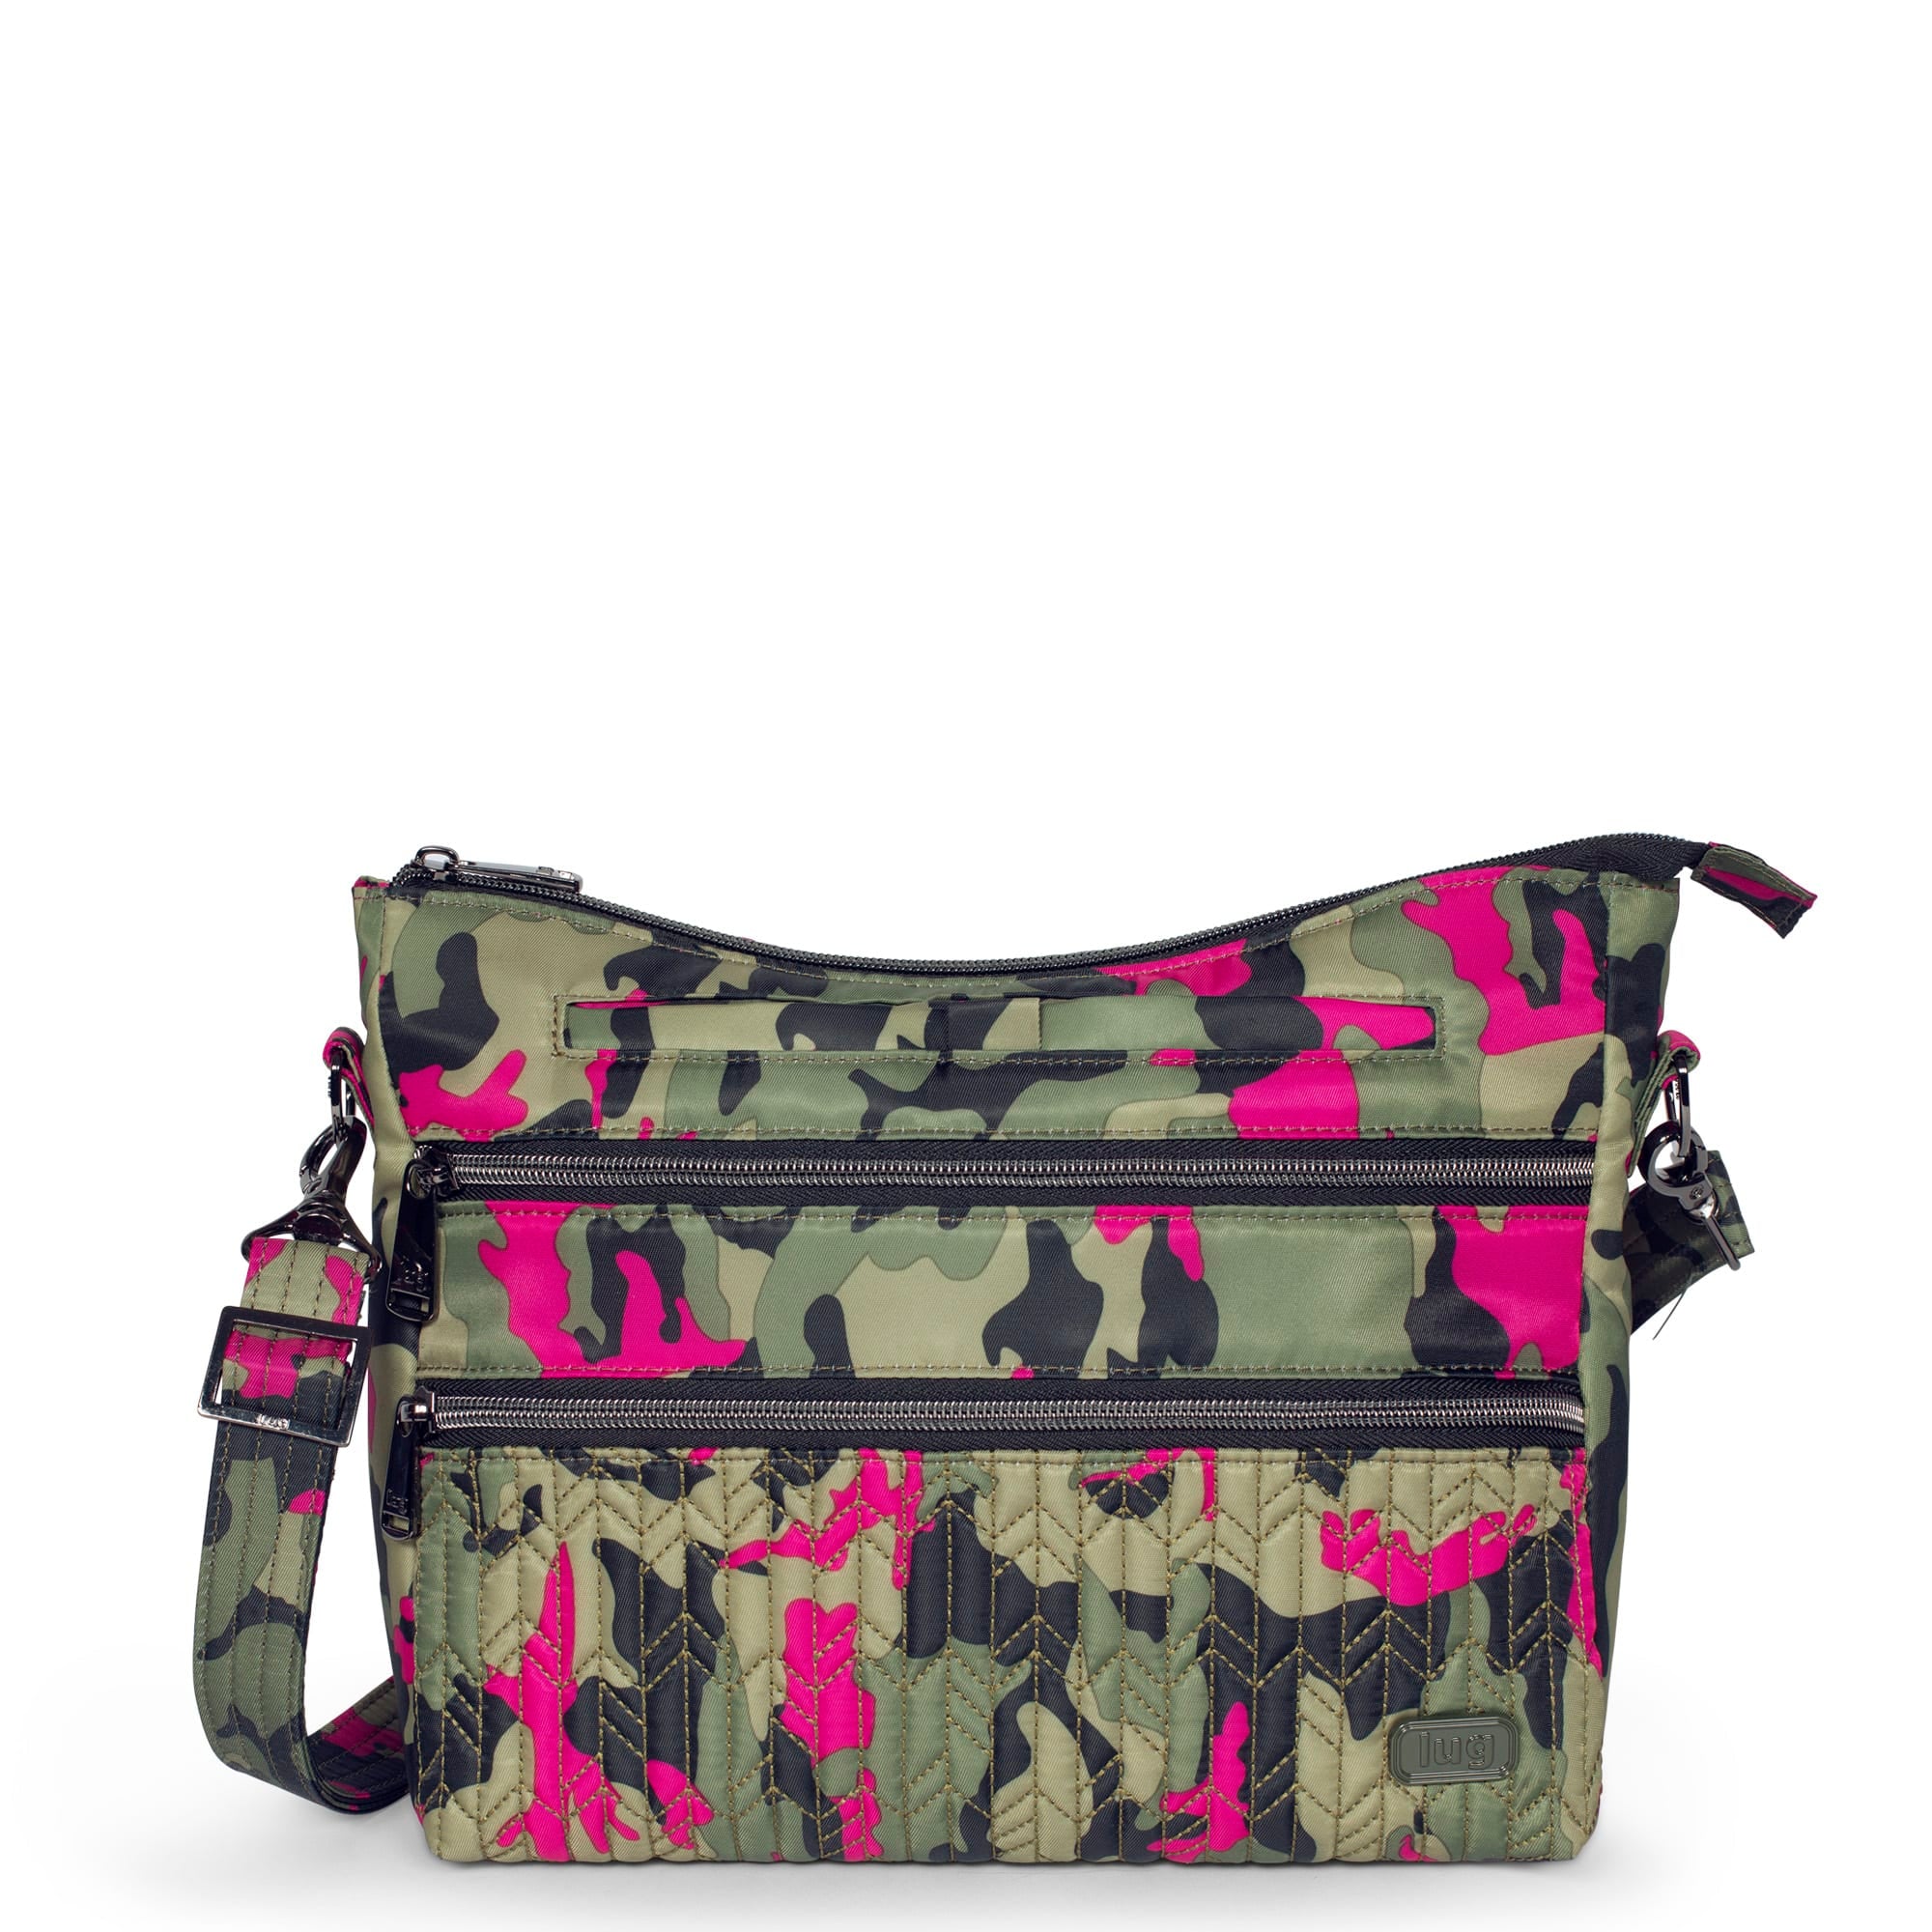 Black Crossbody Bag, Pink & Gold Camo Strap